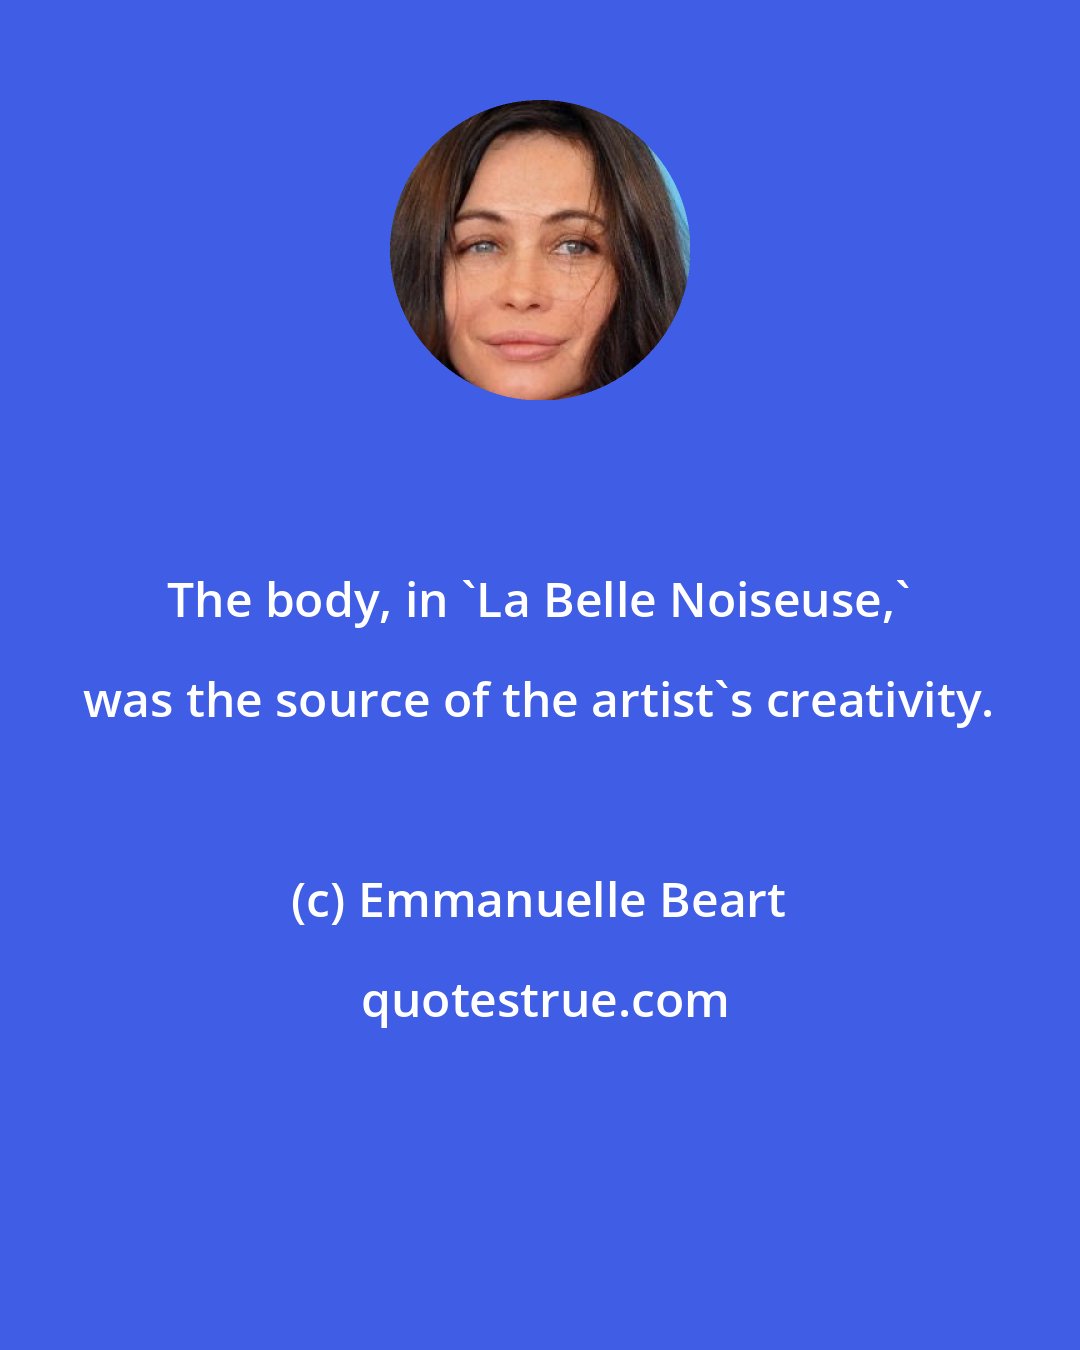 Emmanuelle Beart: The body, in 'La Belle Noiseuse,' was the source of the artist's creativity.